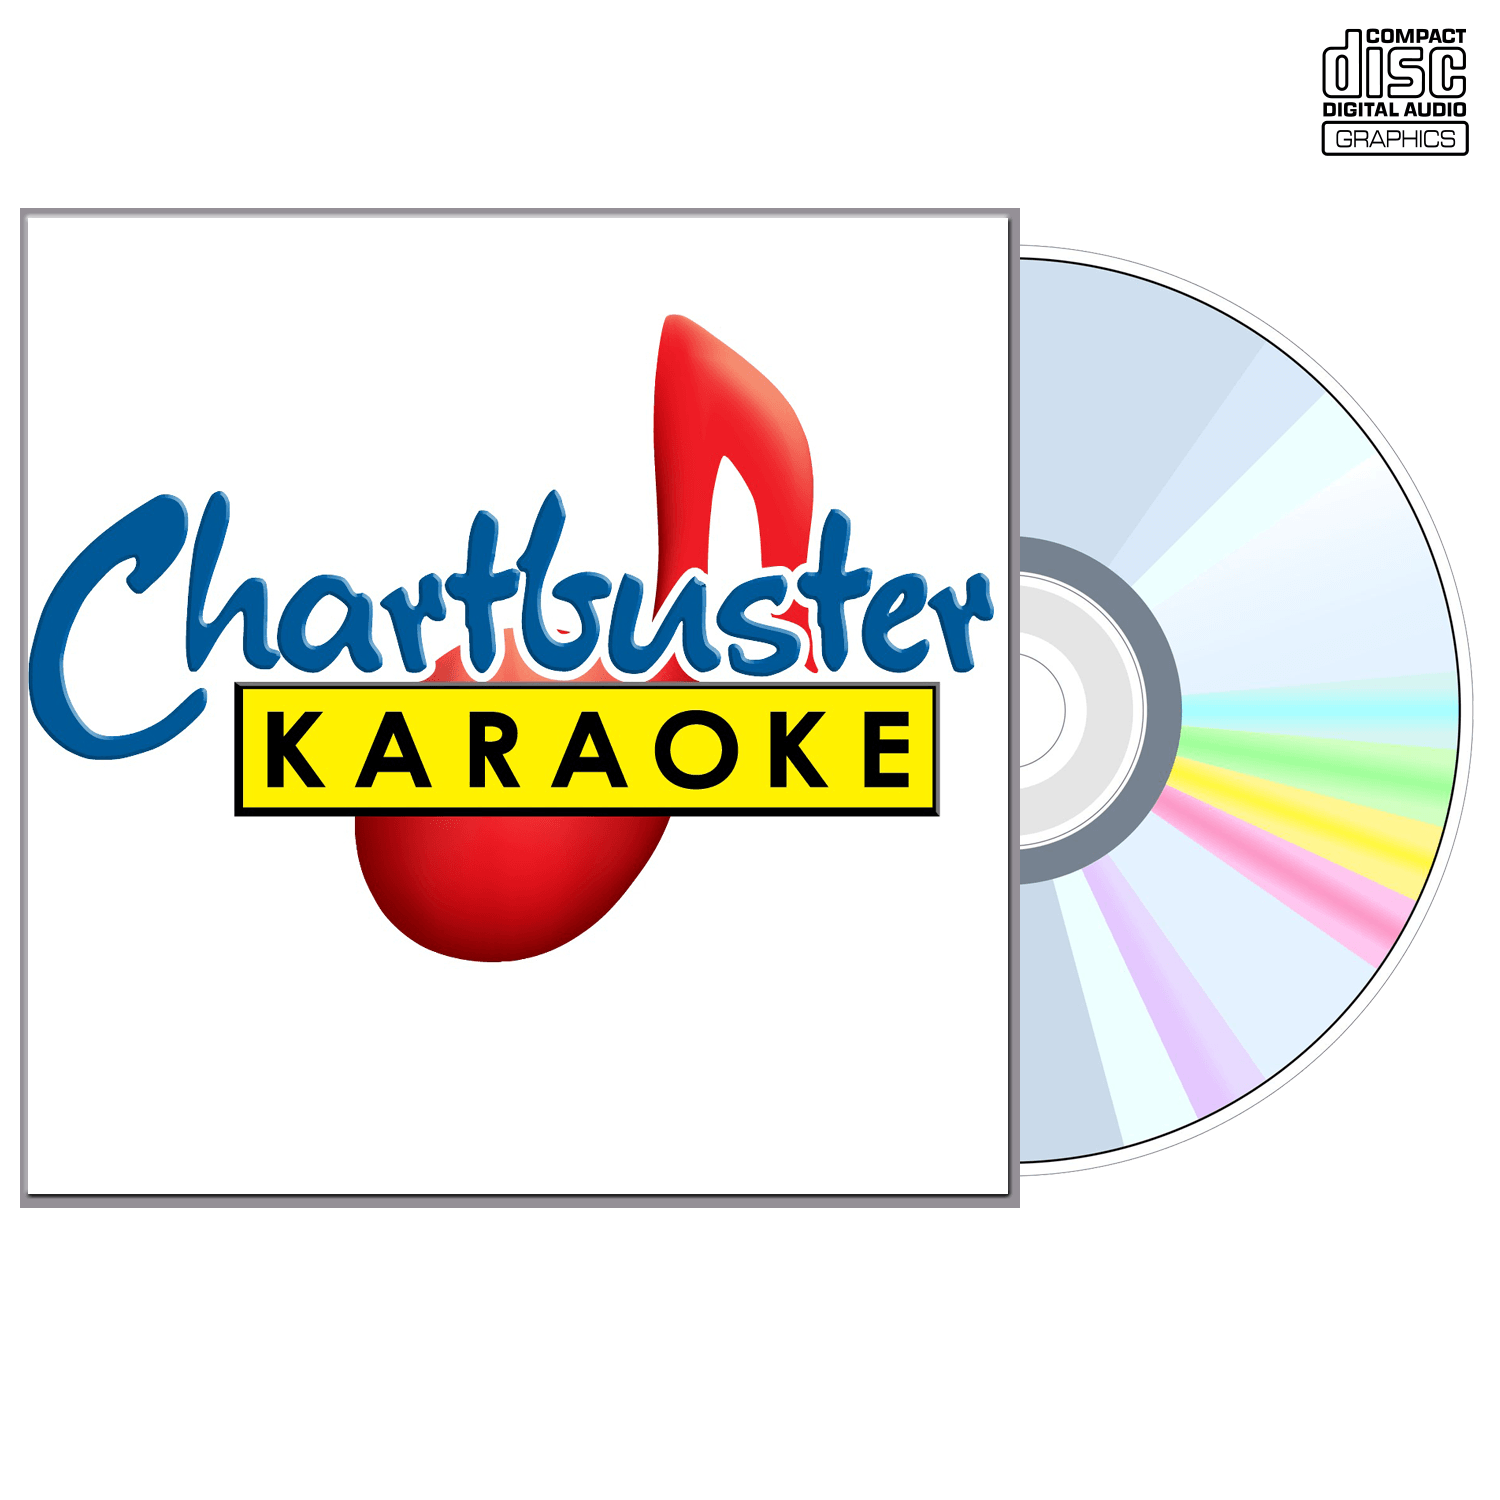 The Judds Vol 1 - CD+G - Chartbuster Karaoke - Karaoke Home Entertainment